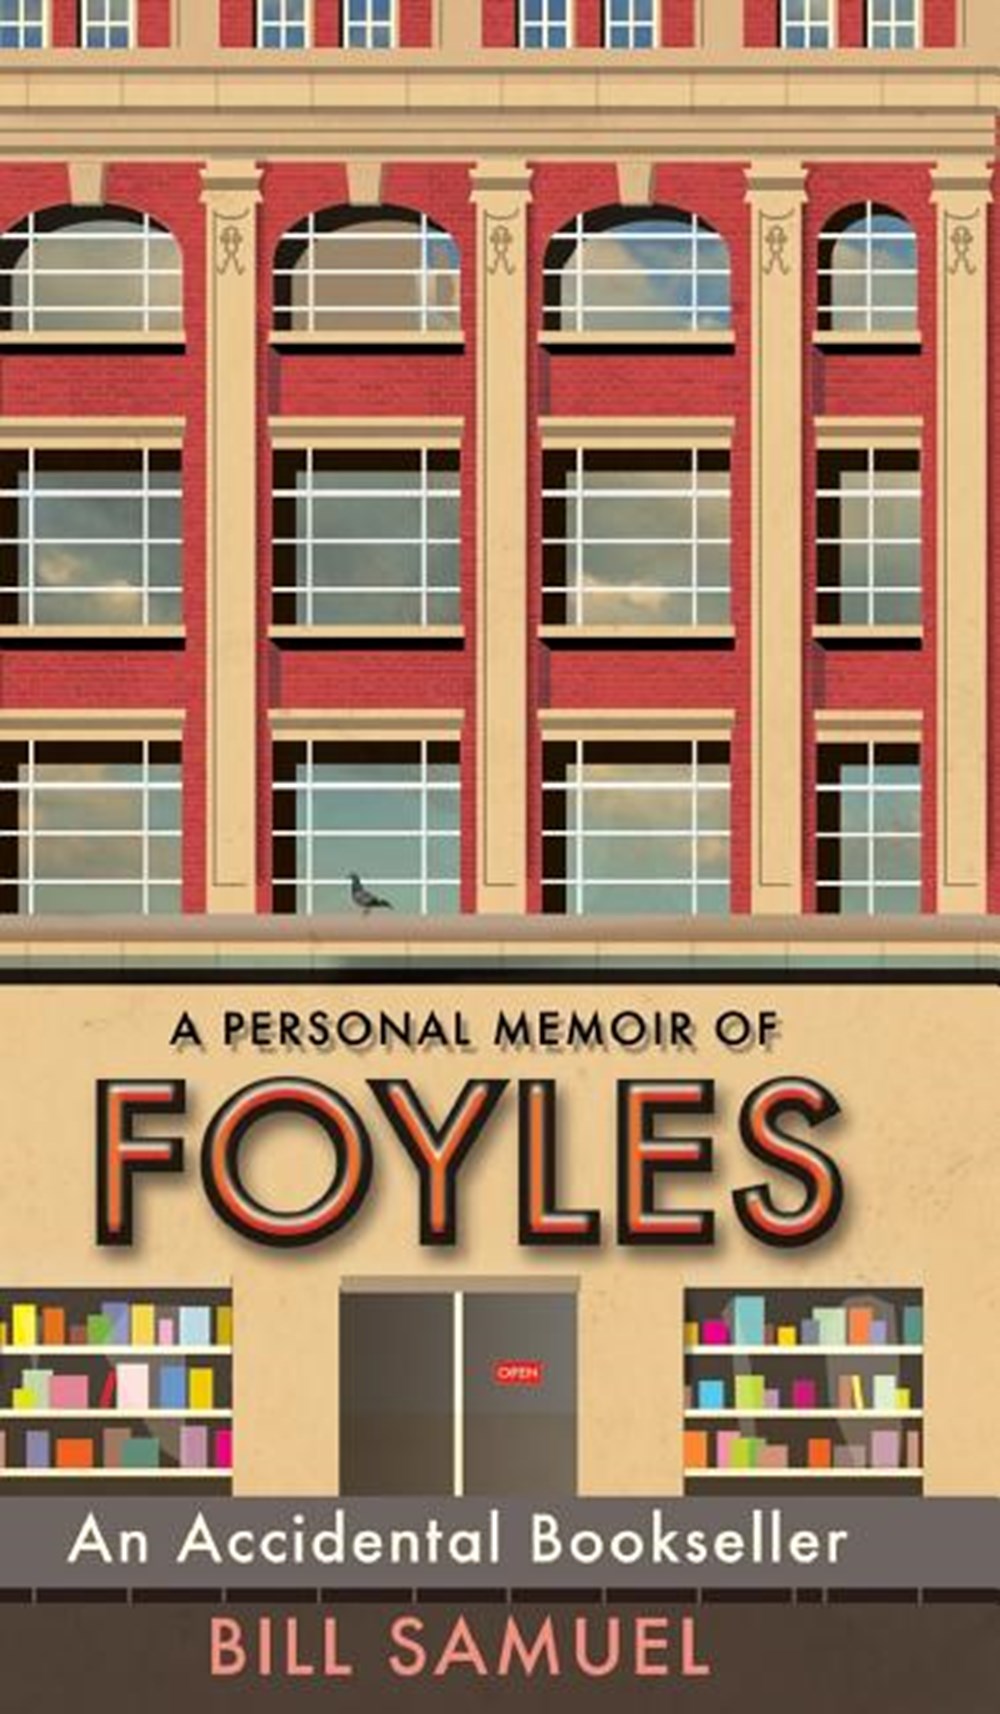 Accidental Bookseller: A Personal Memoir of Foyles (Hardback)